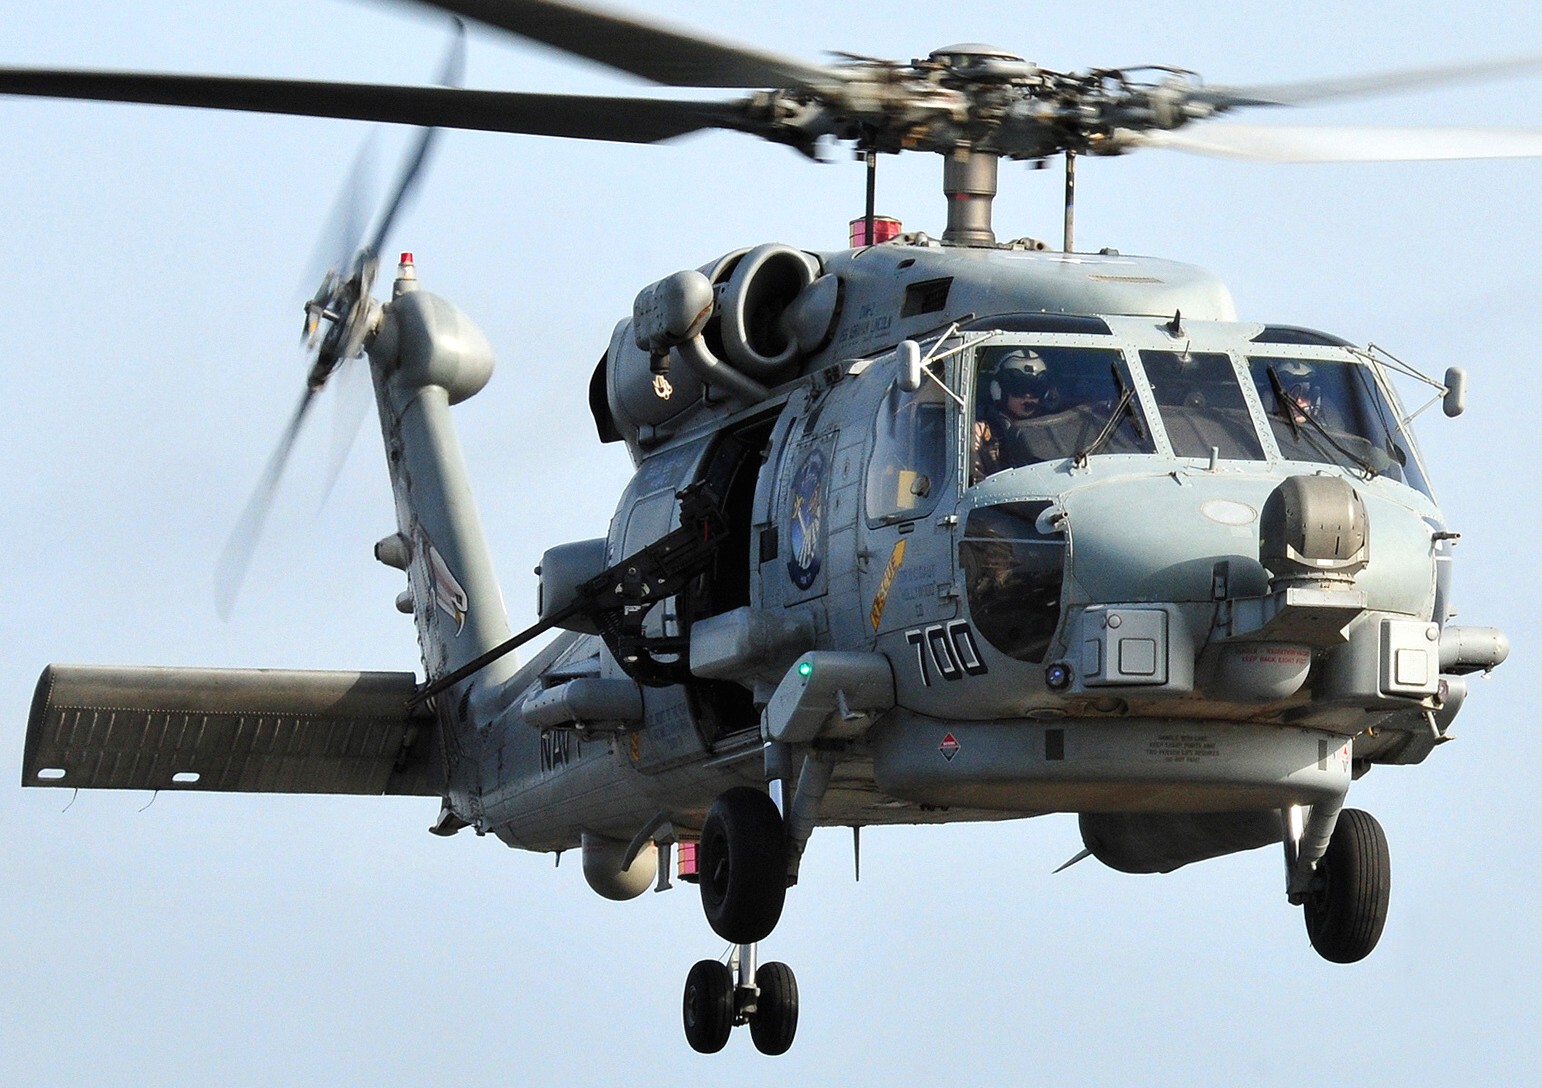 hsm-77 saberhawks helicopter maritime strike squadron sikorsky mh-60r seahawk us navy 2012 40 caliber .50 machine gun